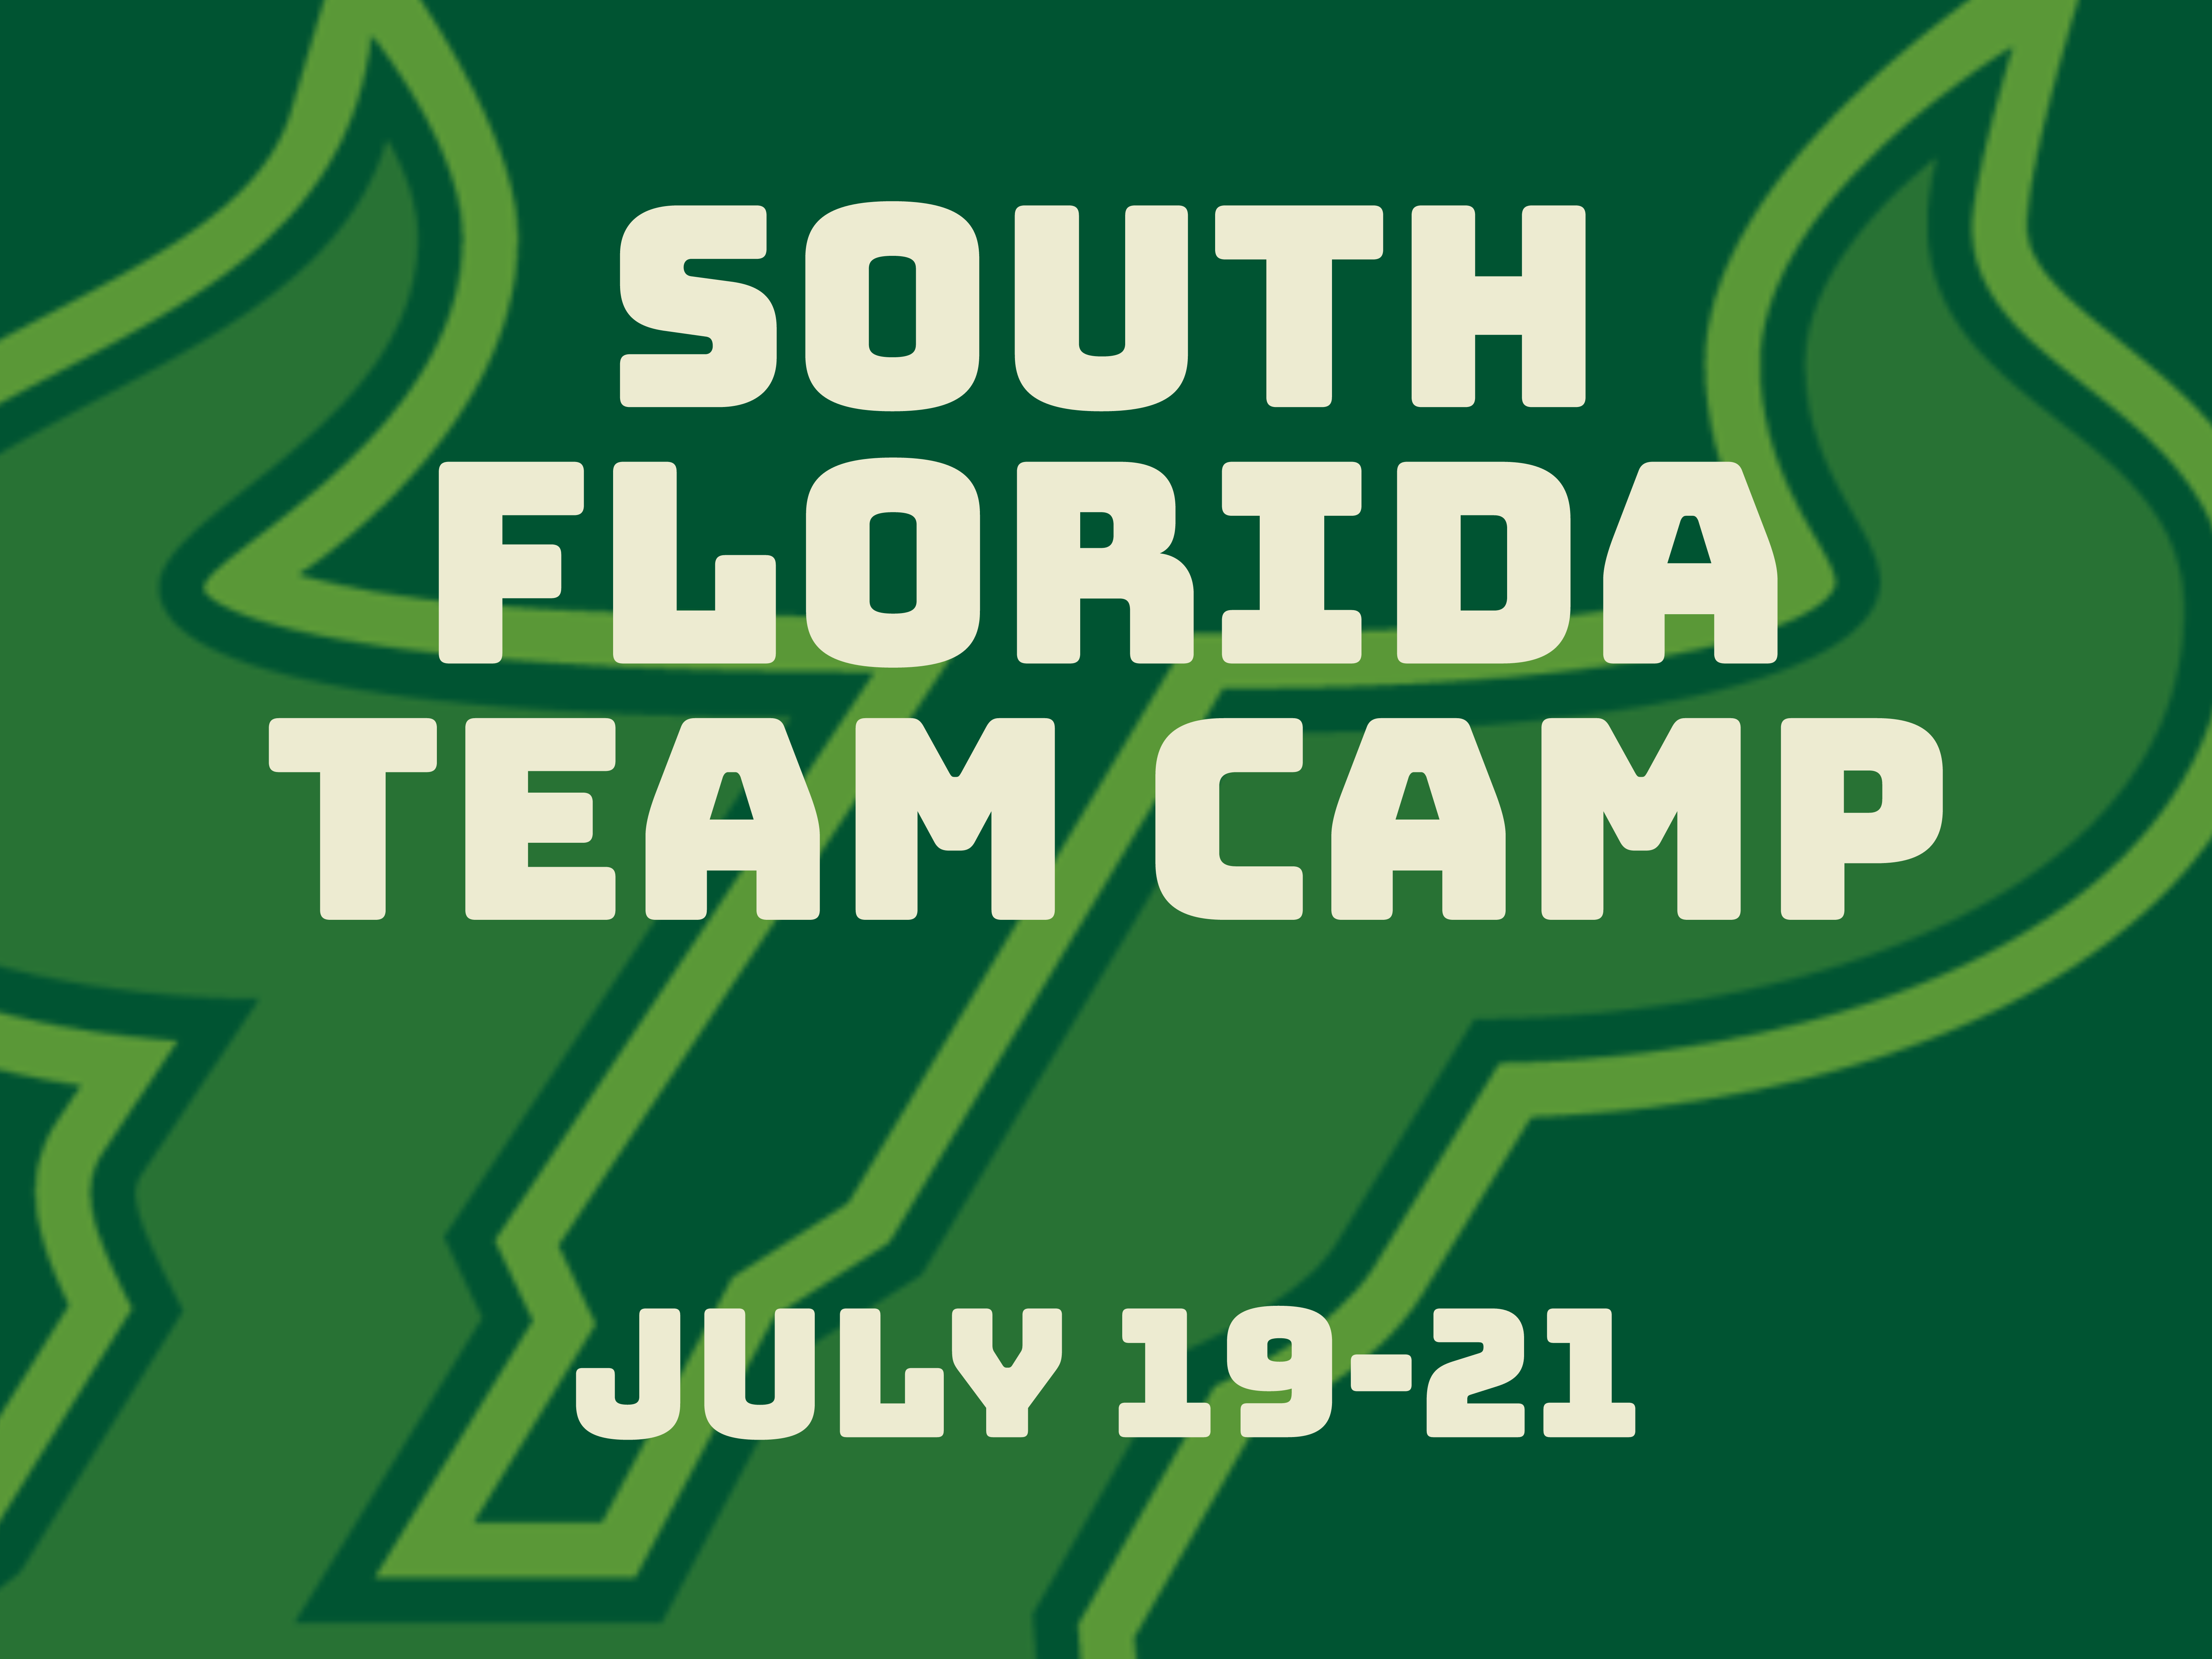 South Florida Team Camp - Contact for more details event image